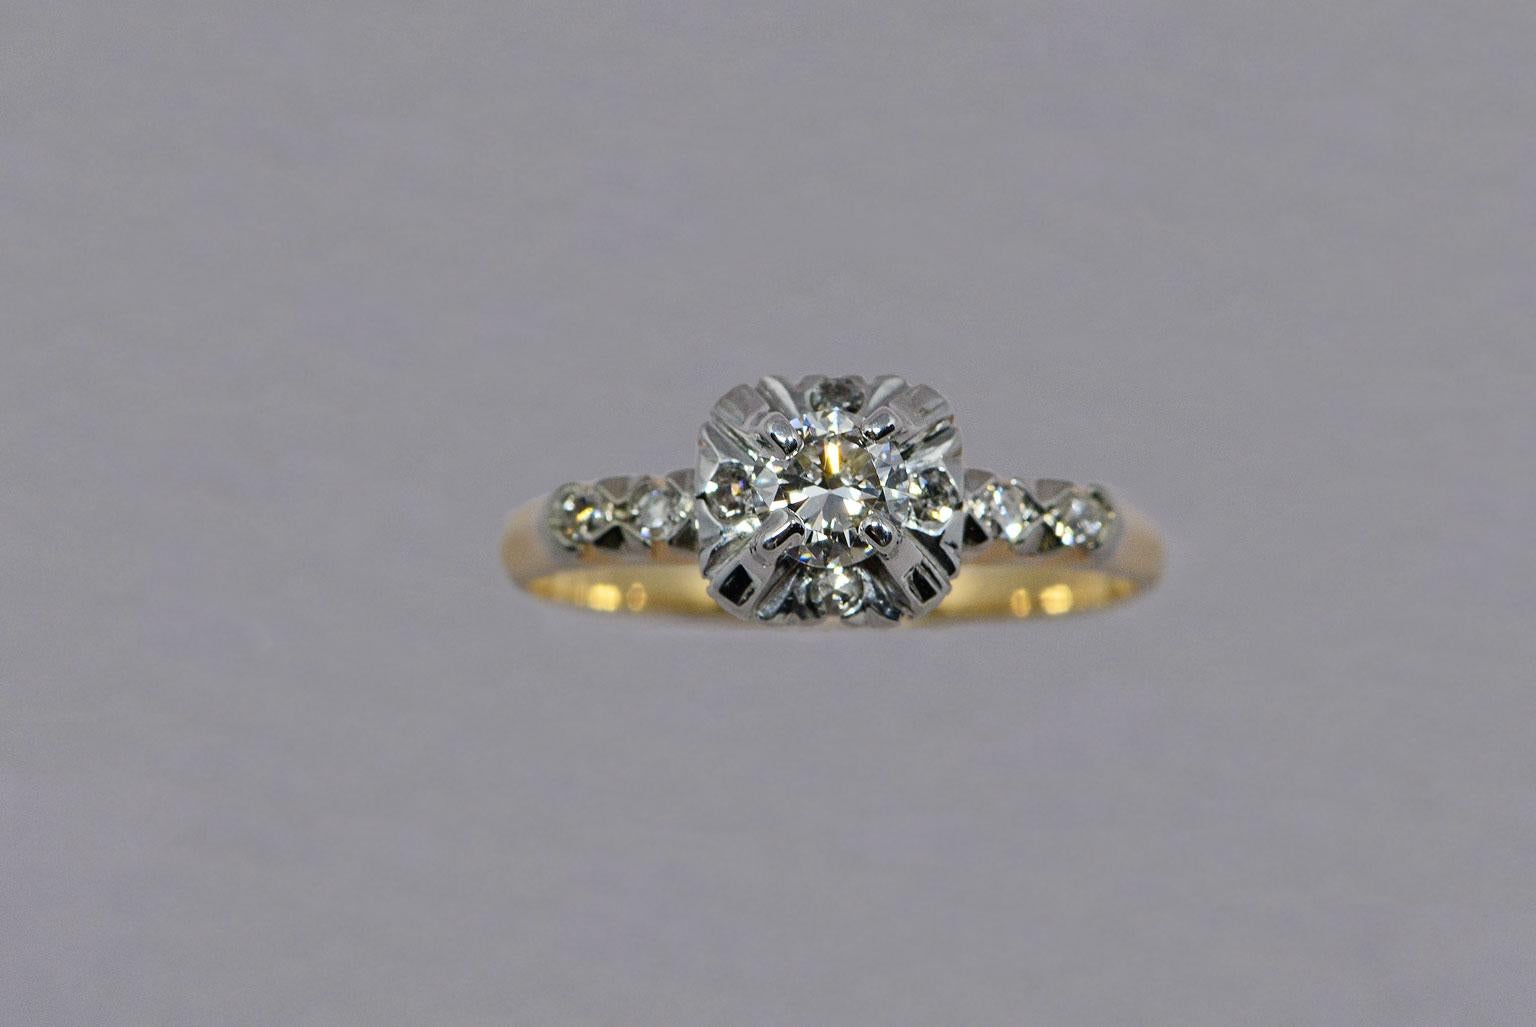 0.24 carat diamond ring